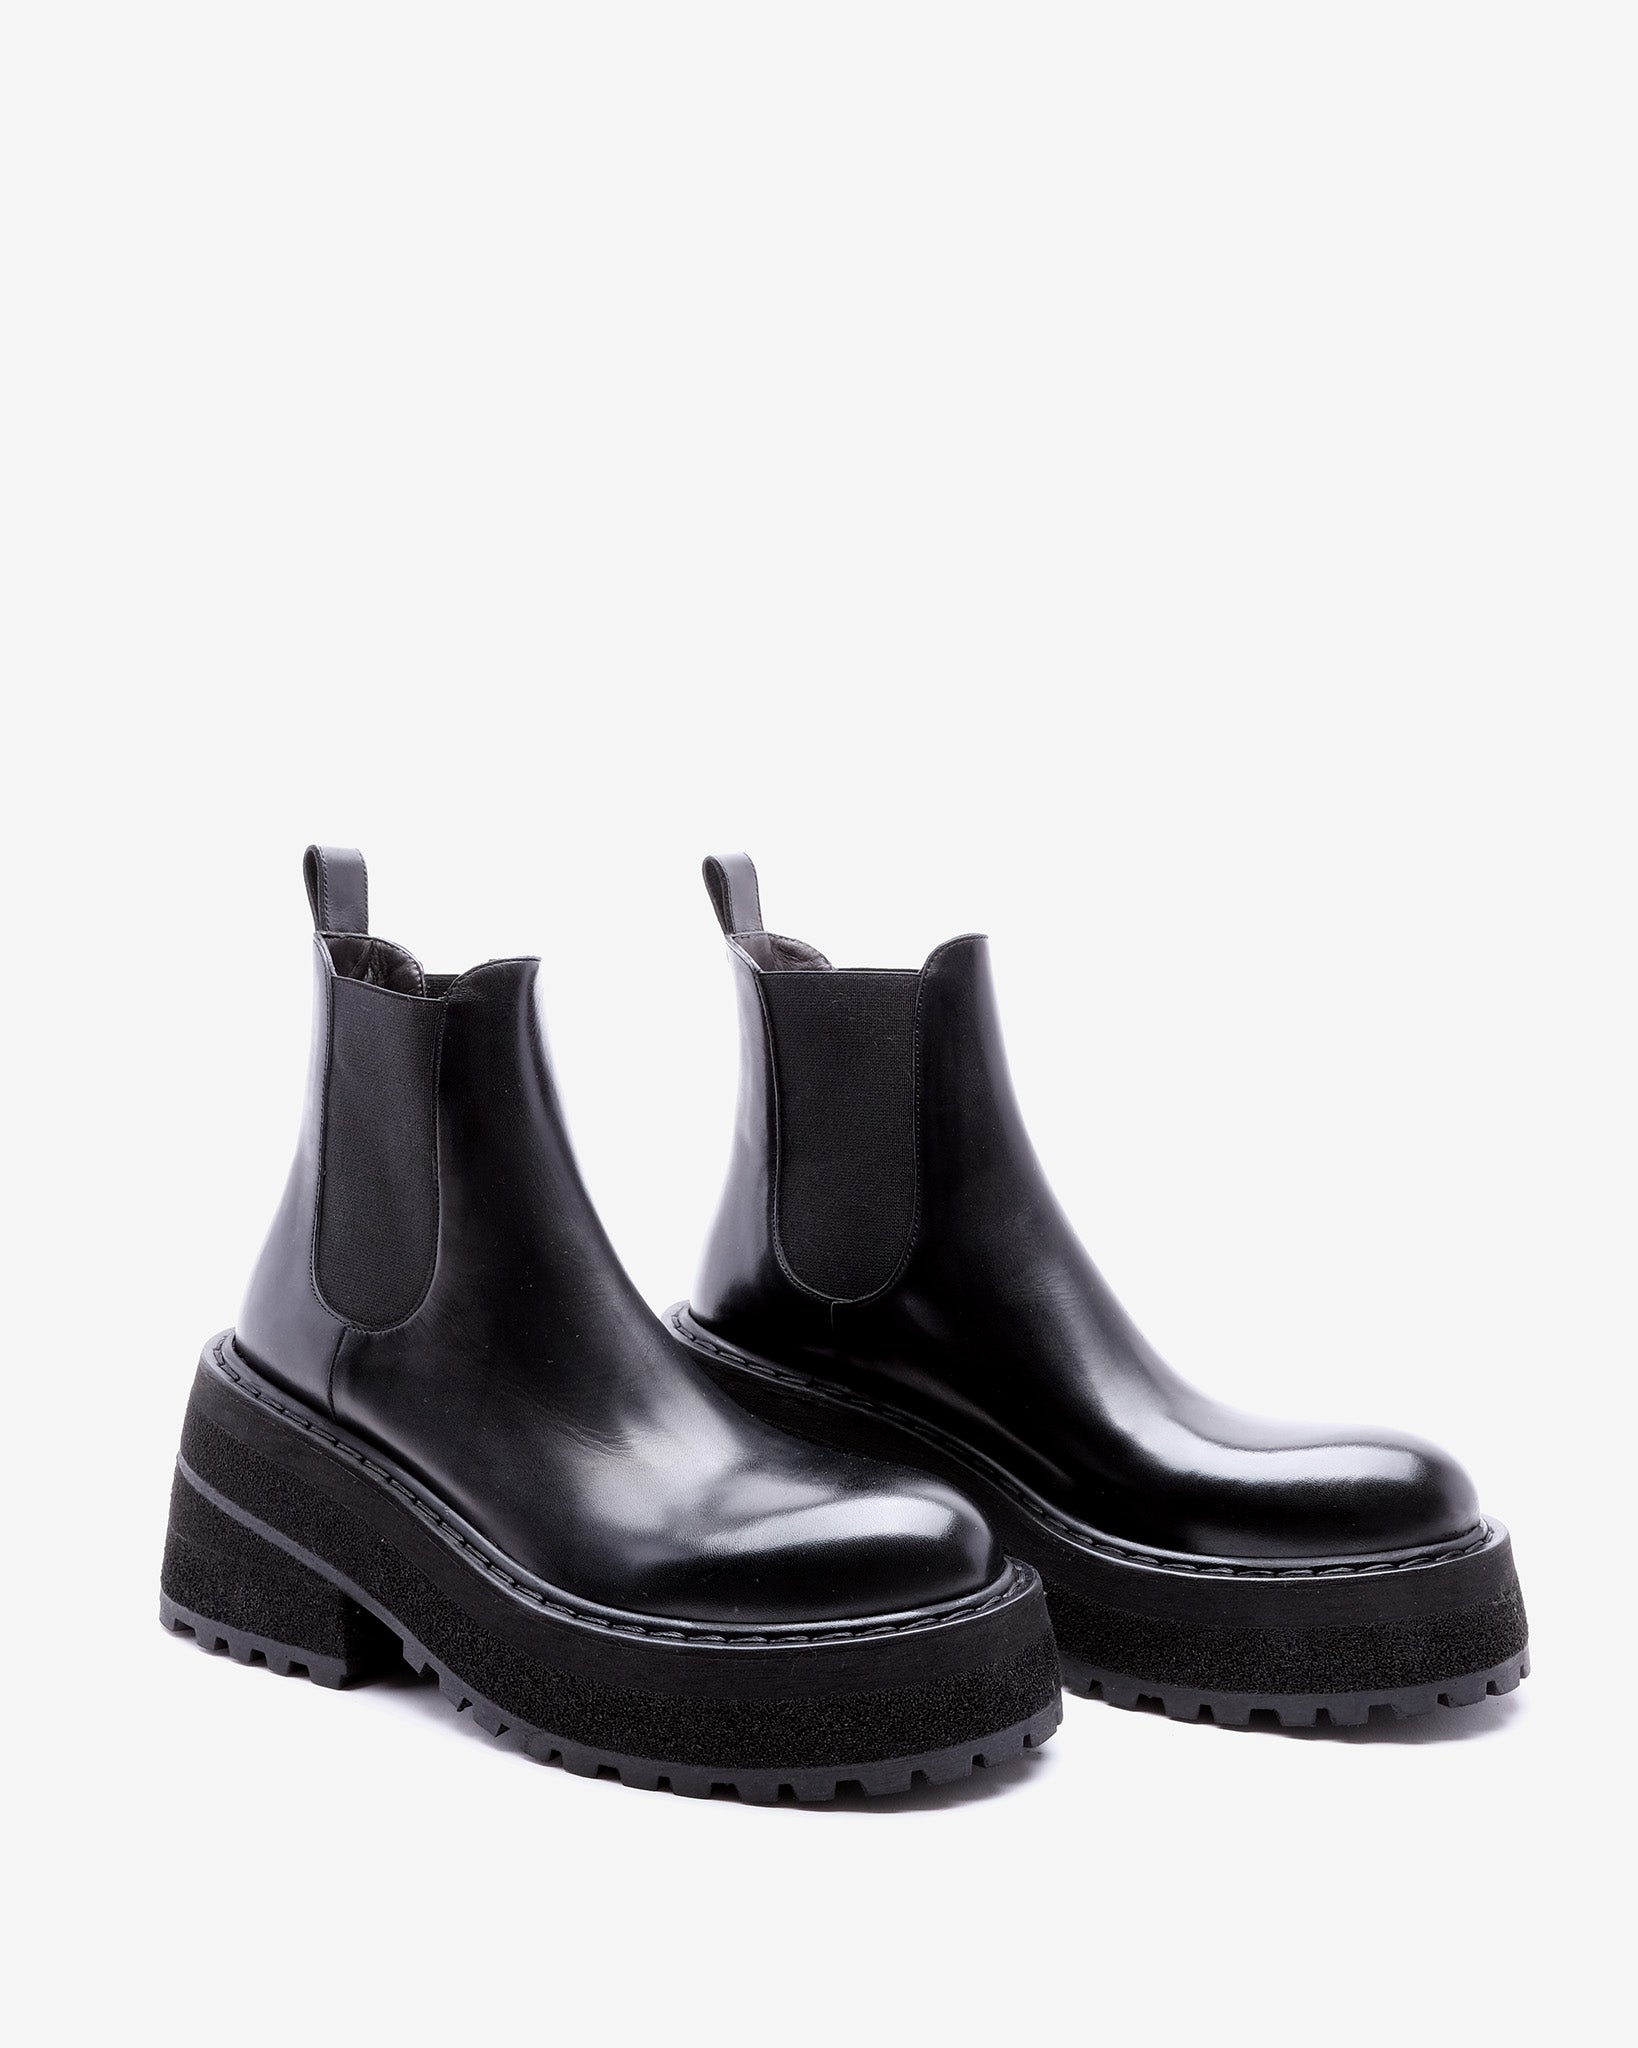 Carretta MW6022 Black Leather Boots